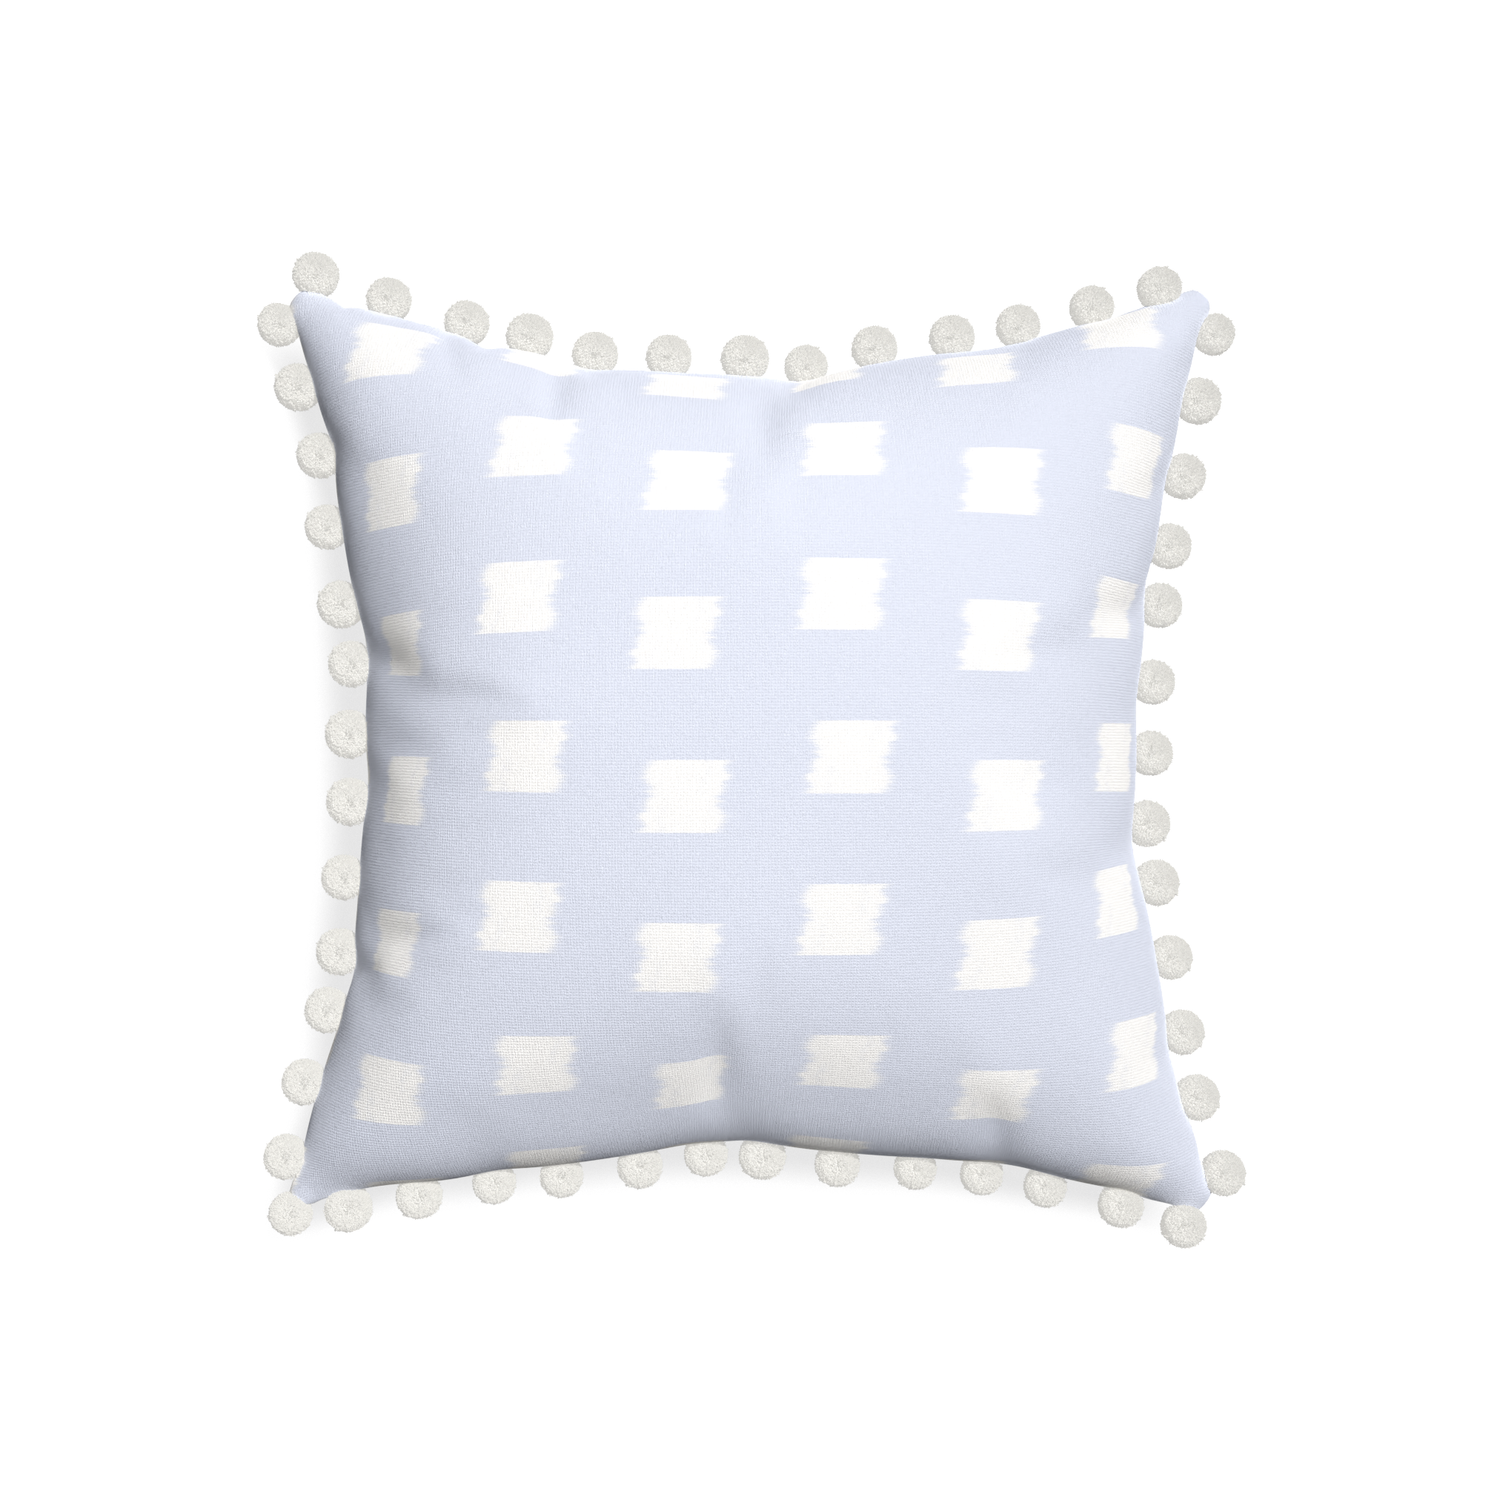 20-square denton custom sky blue patternpillow with snow pom pom on white background